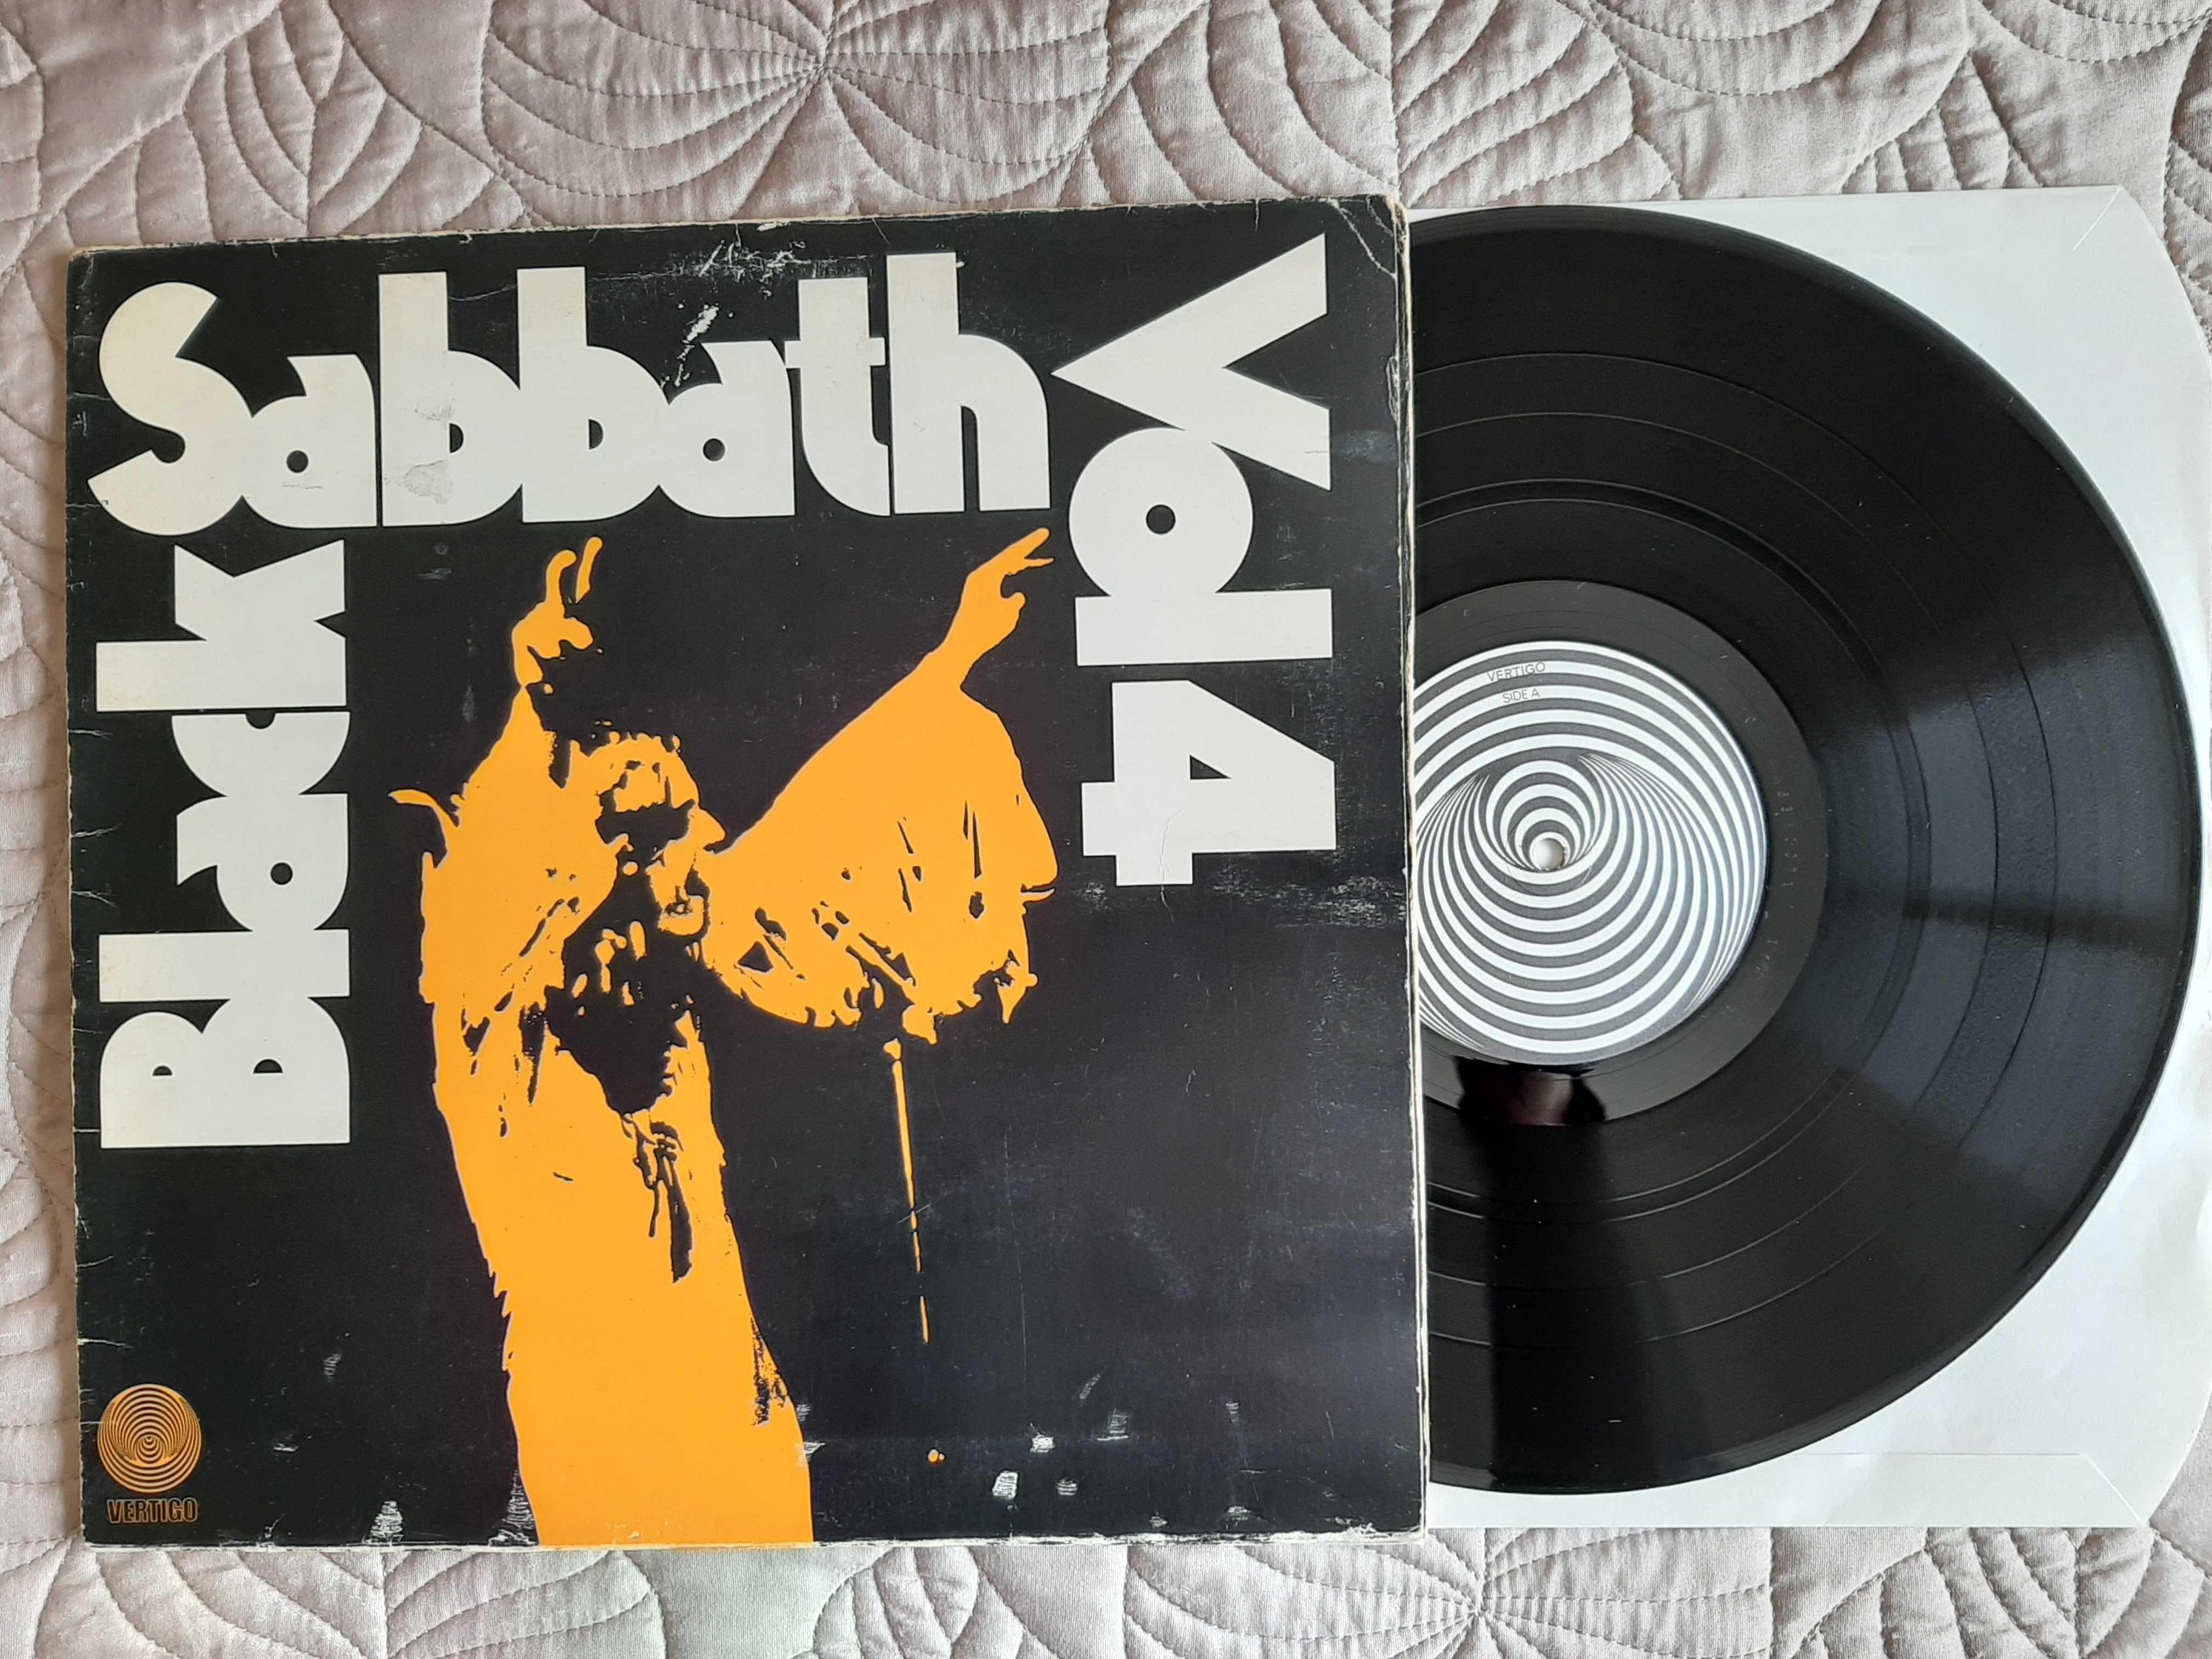 Black Sabbath - Vol 4 - Germany - Vinyl LP Vertigo swirl labels